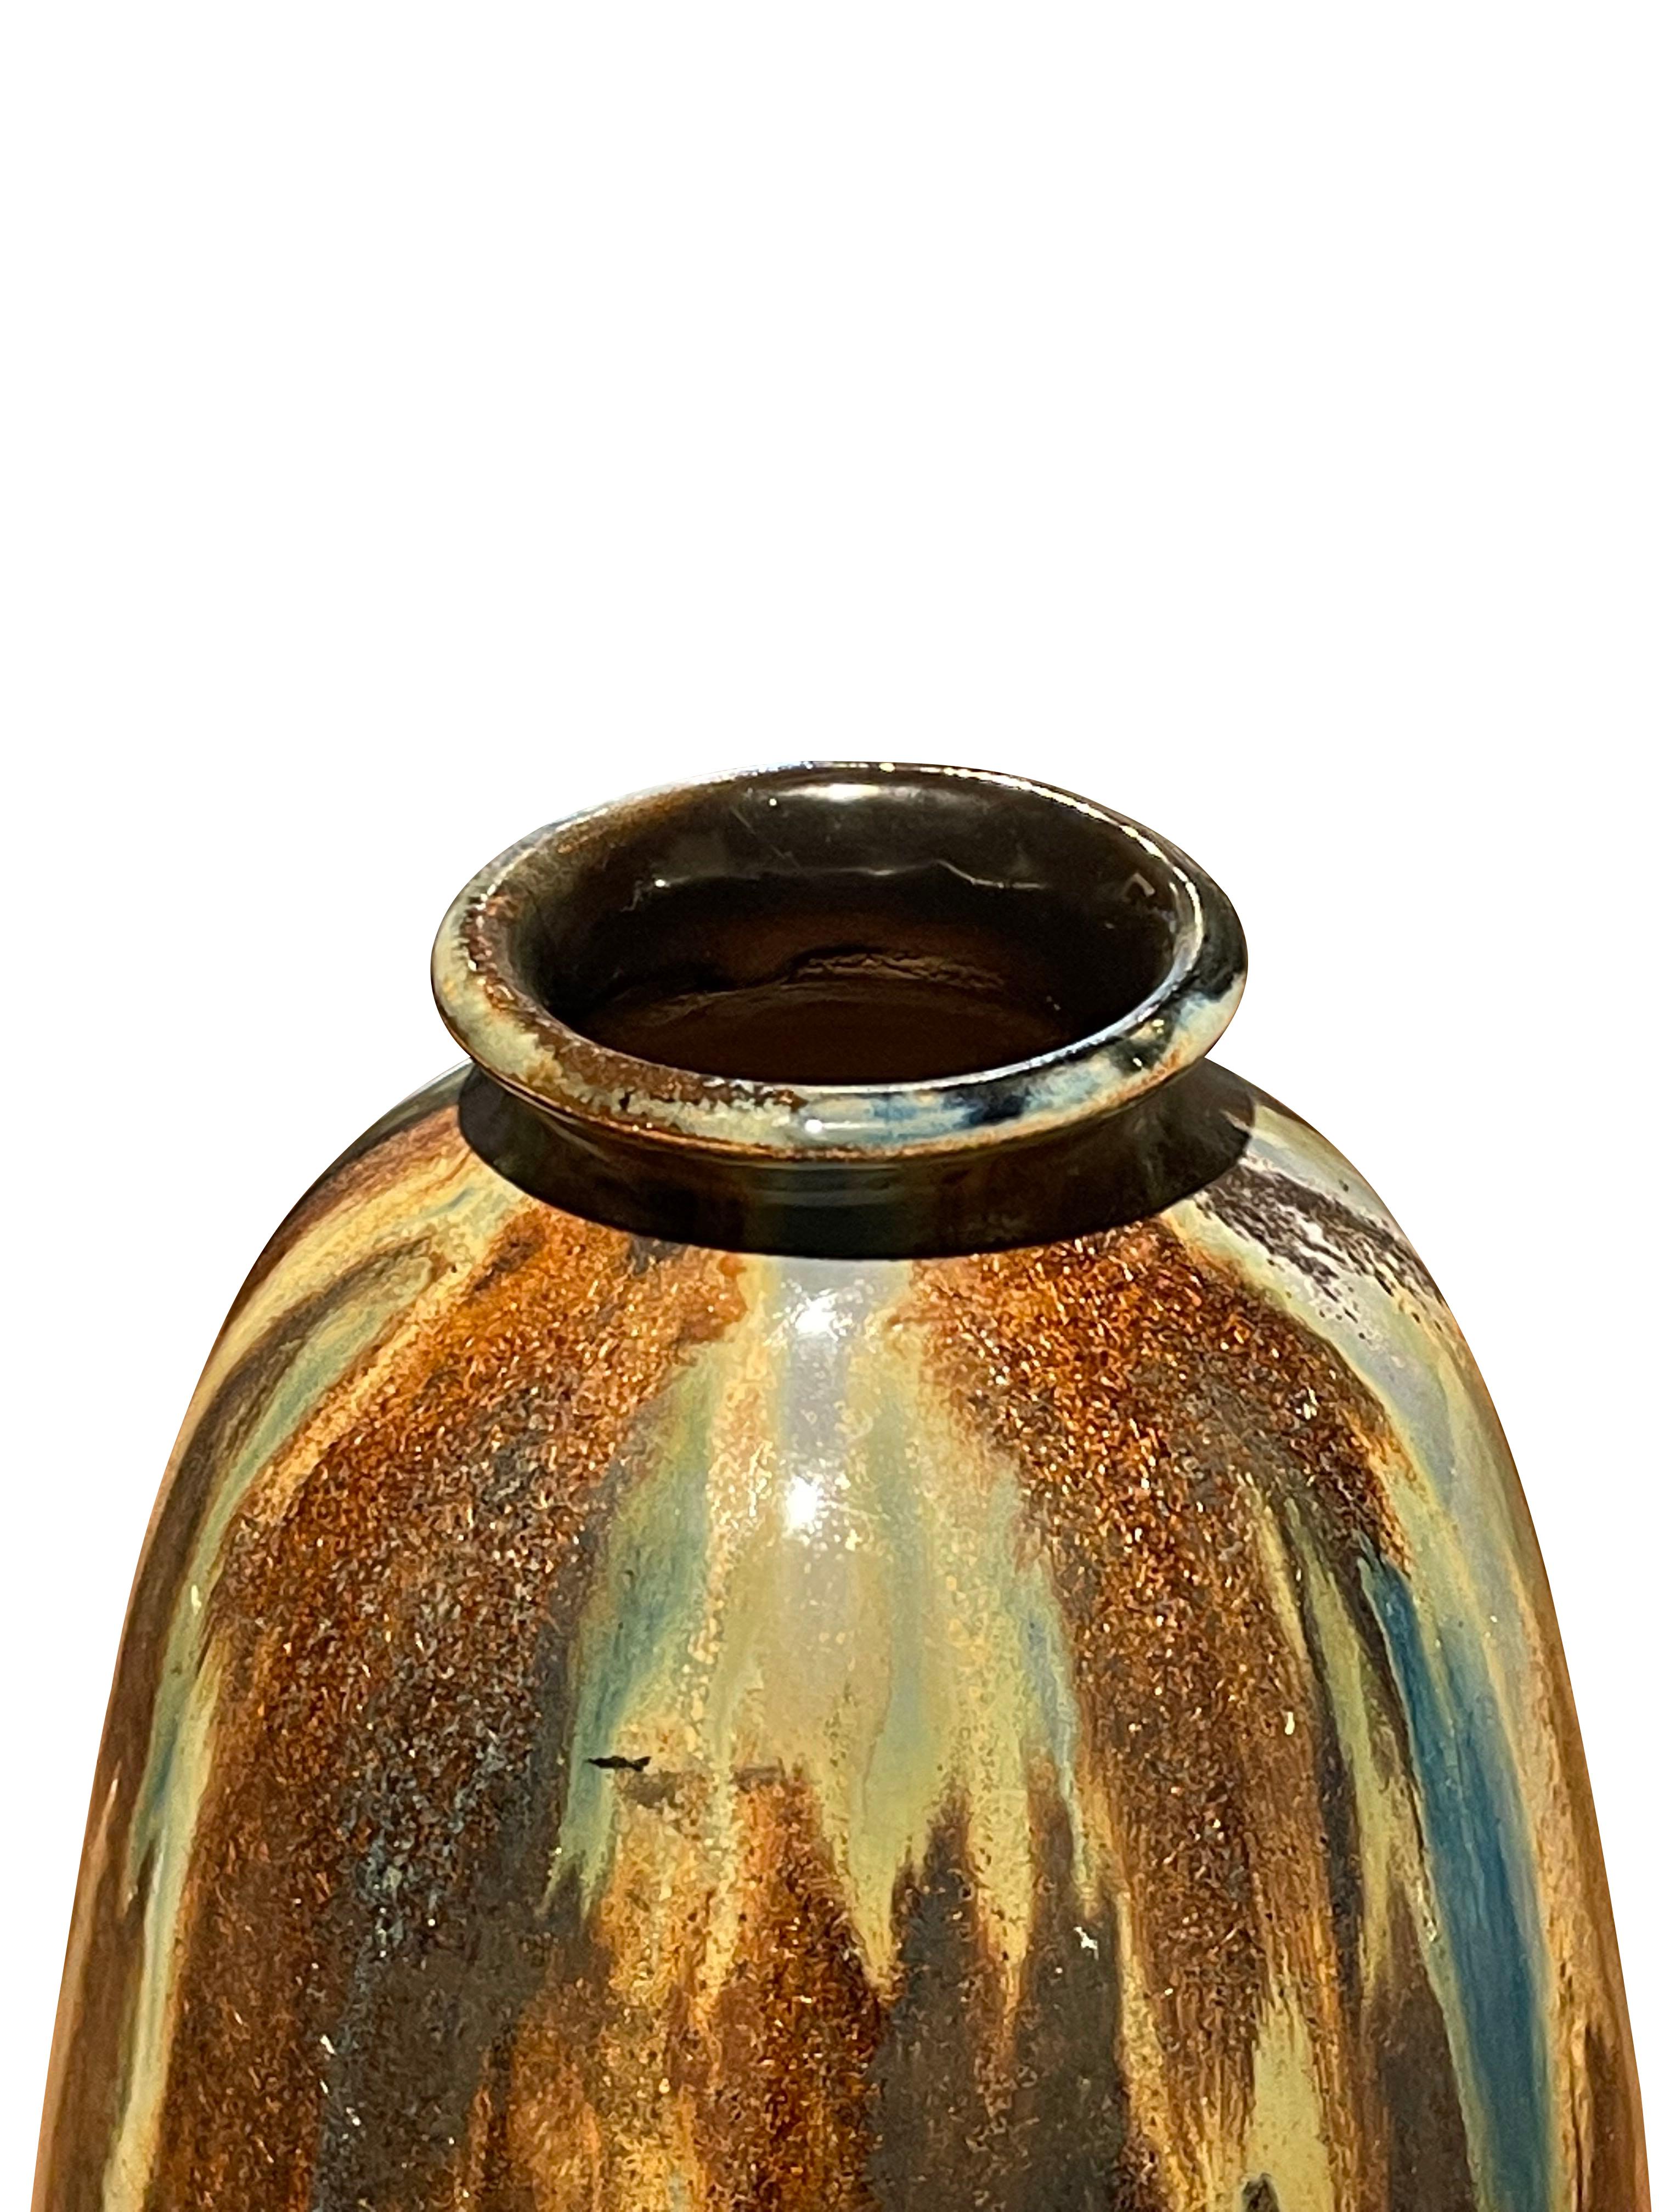 1920's Belgian signed tall terracotta vase.
Decorative drip glaze.
Arriving TBD.